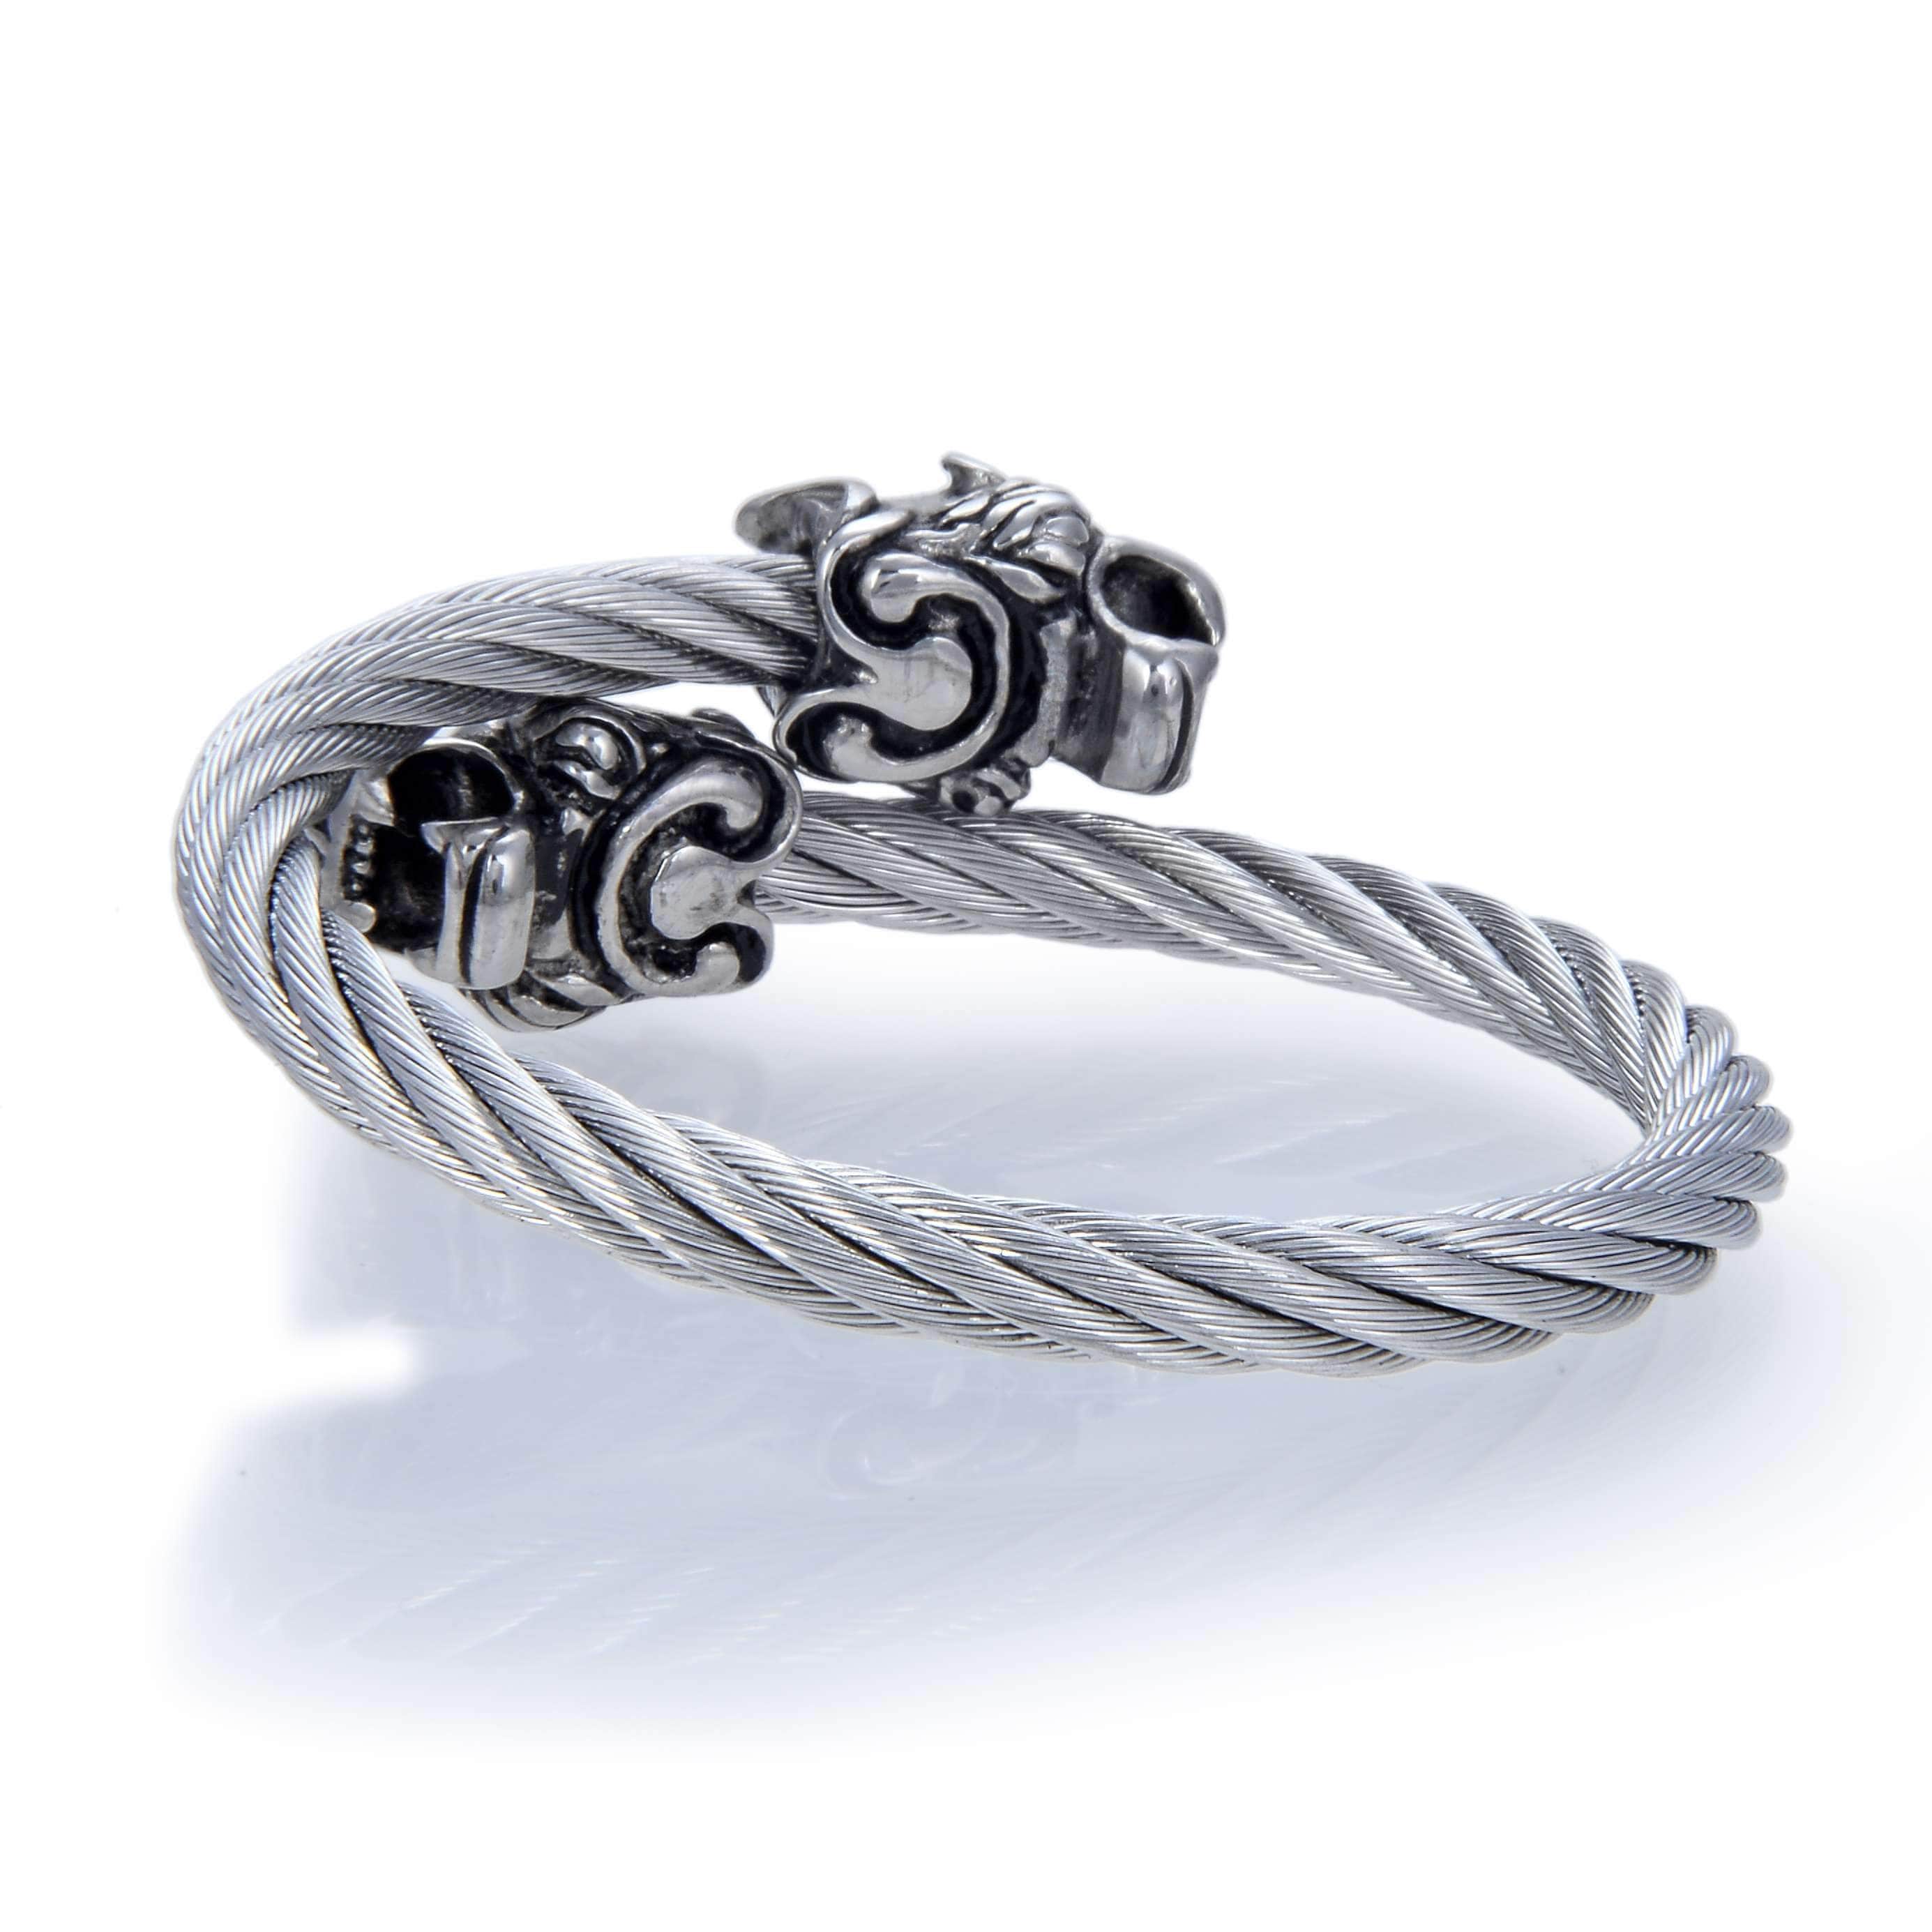 Kalifano Steel Hearts Jewelry Steel Hearts Rope Chain Kirin Tip Open Bangle Bracelet SHB200-57